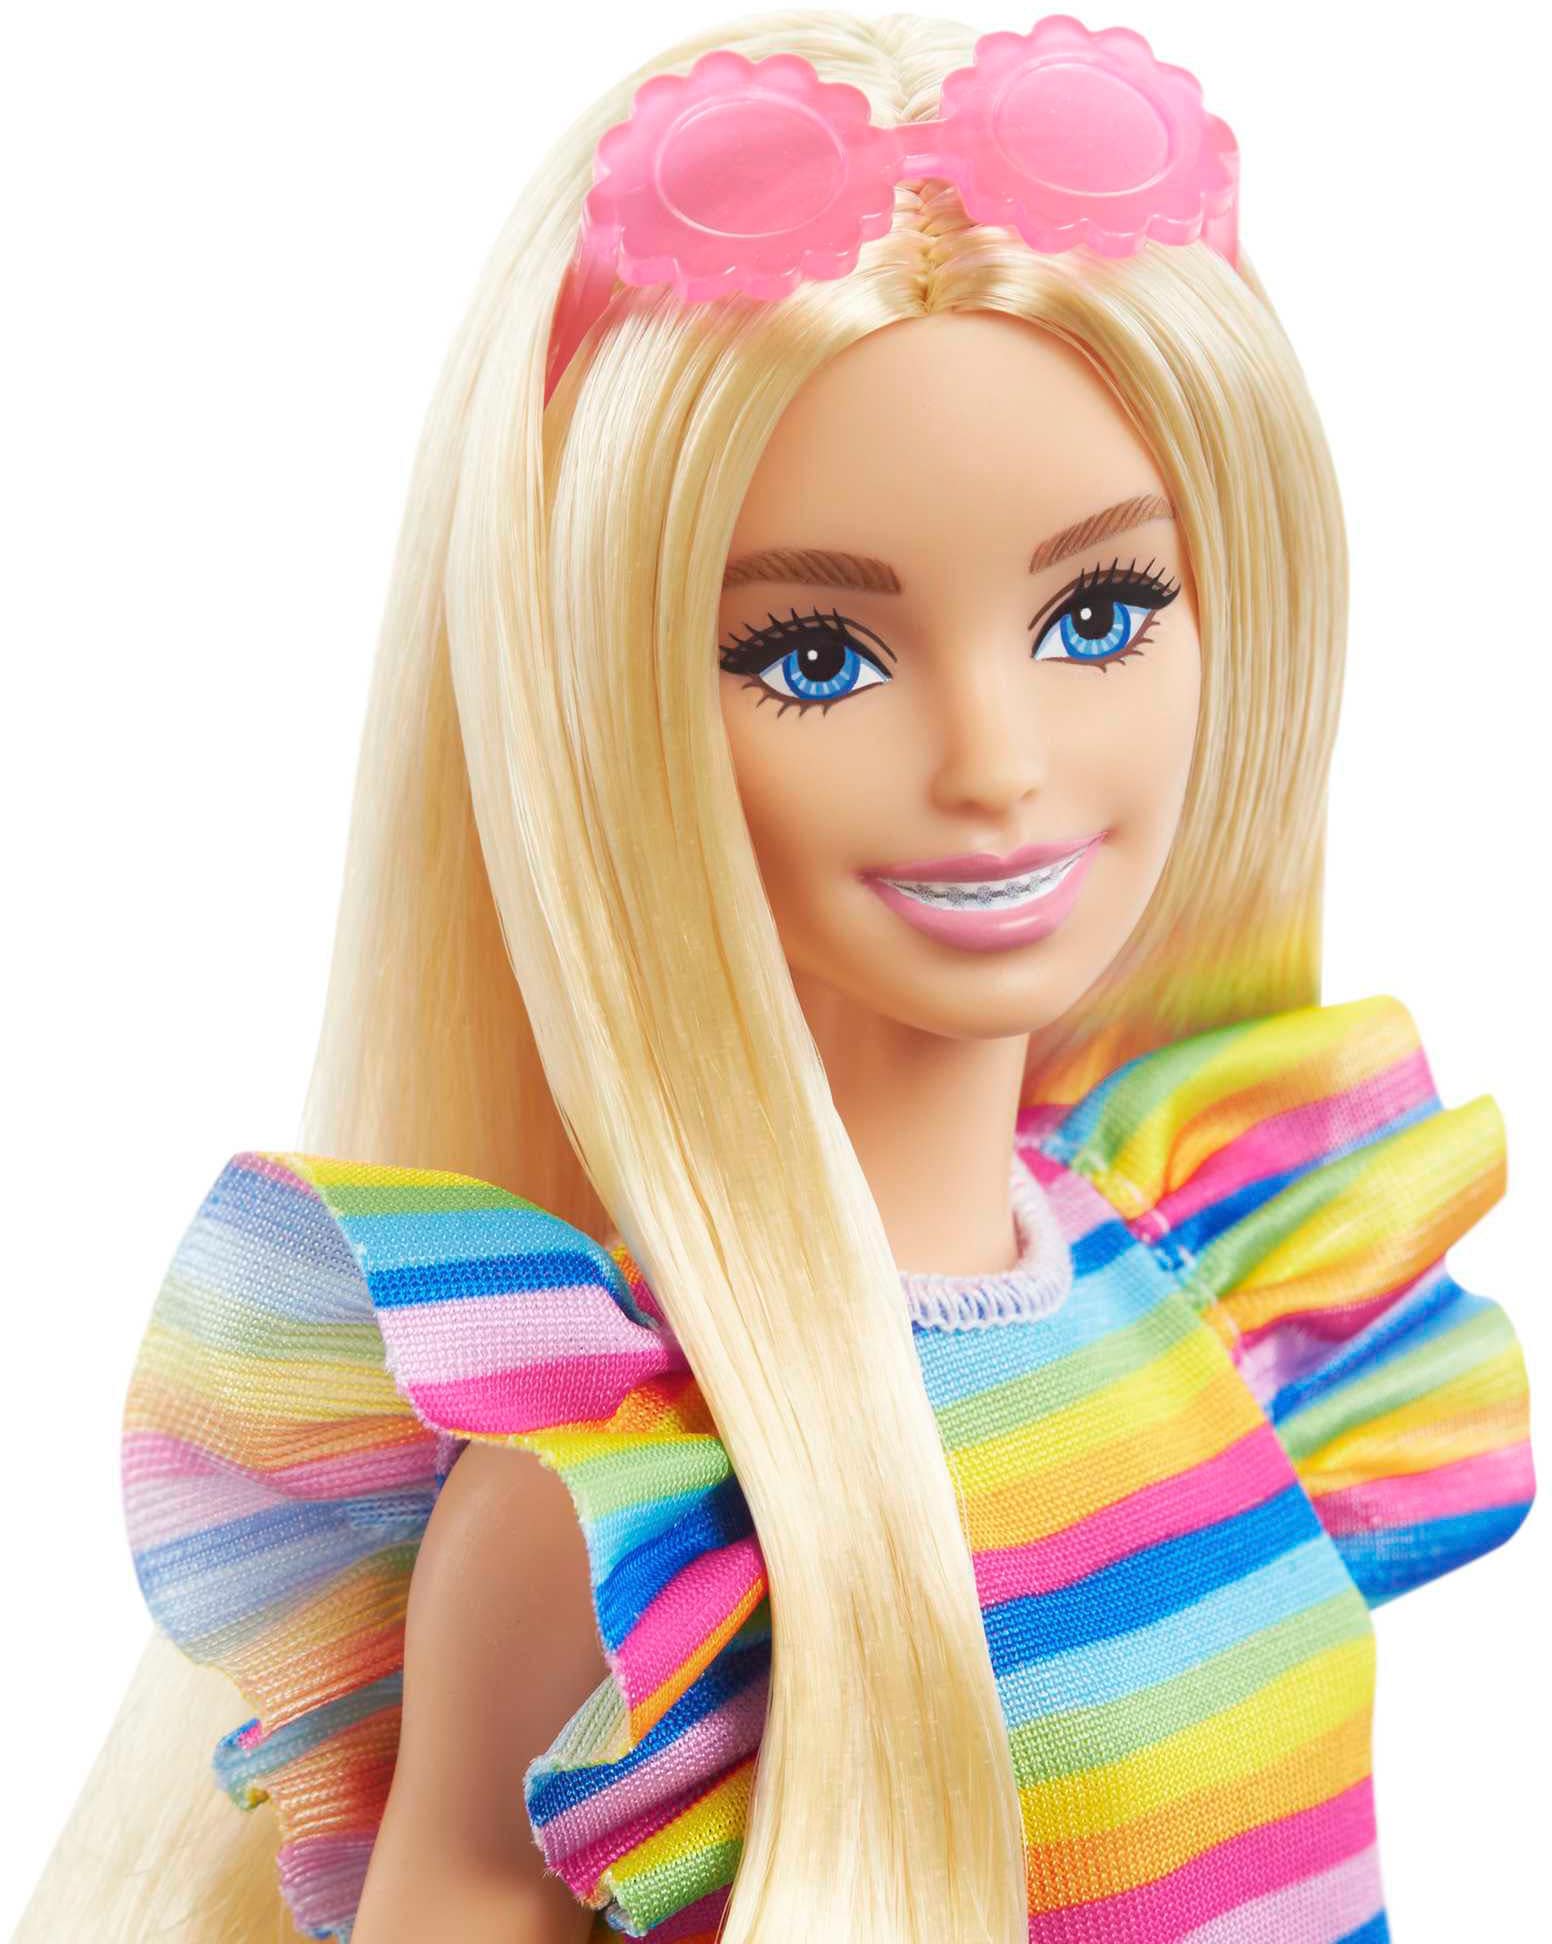 Barbie Anziehpuppe »Fashionistas, Tiered Dress and Braces«